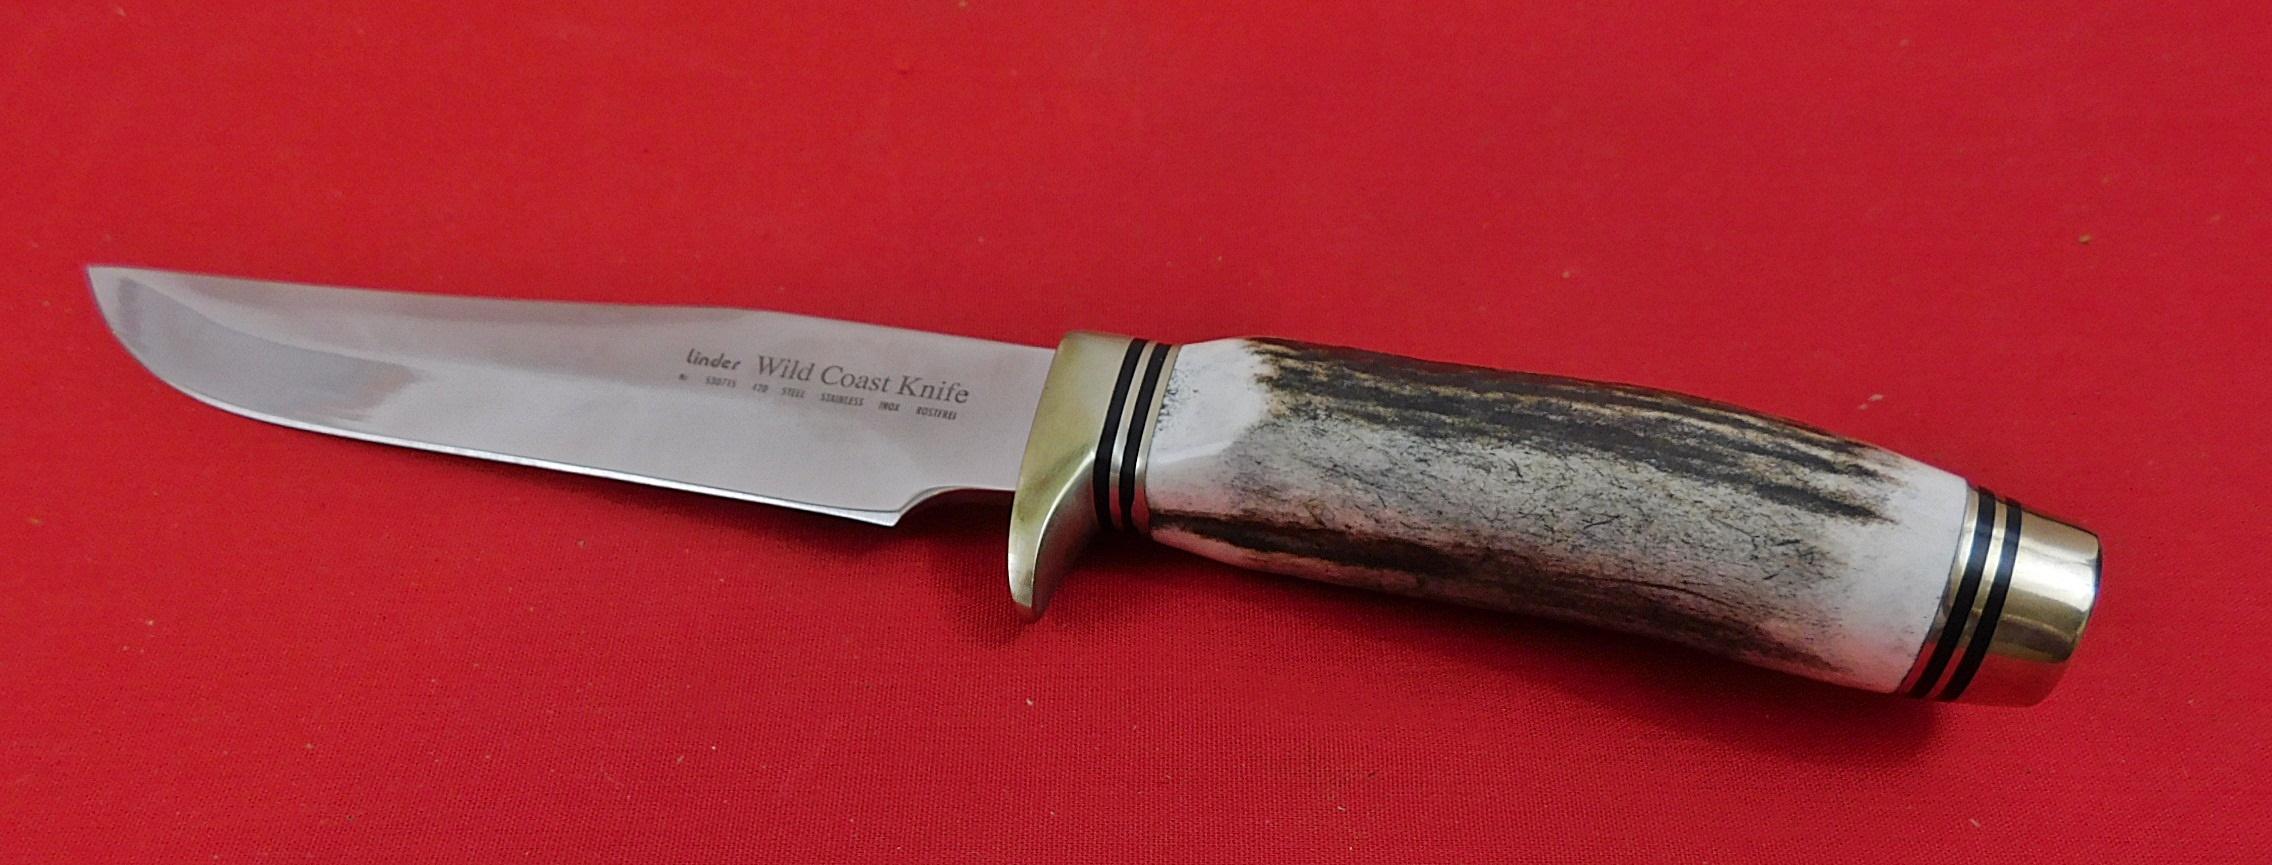 Linder Wild Coast Knife 002.JPG